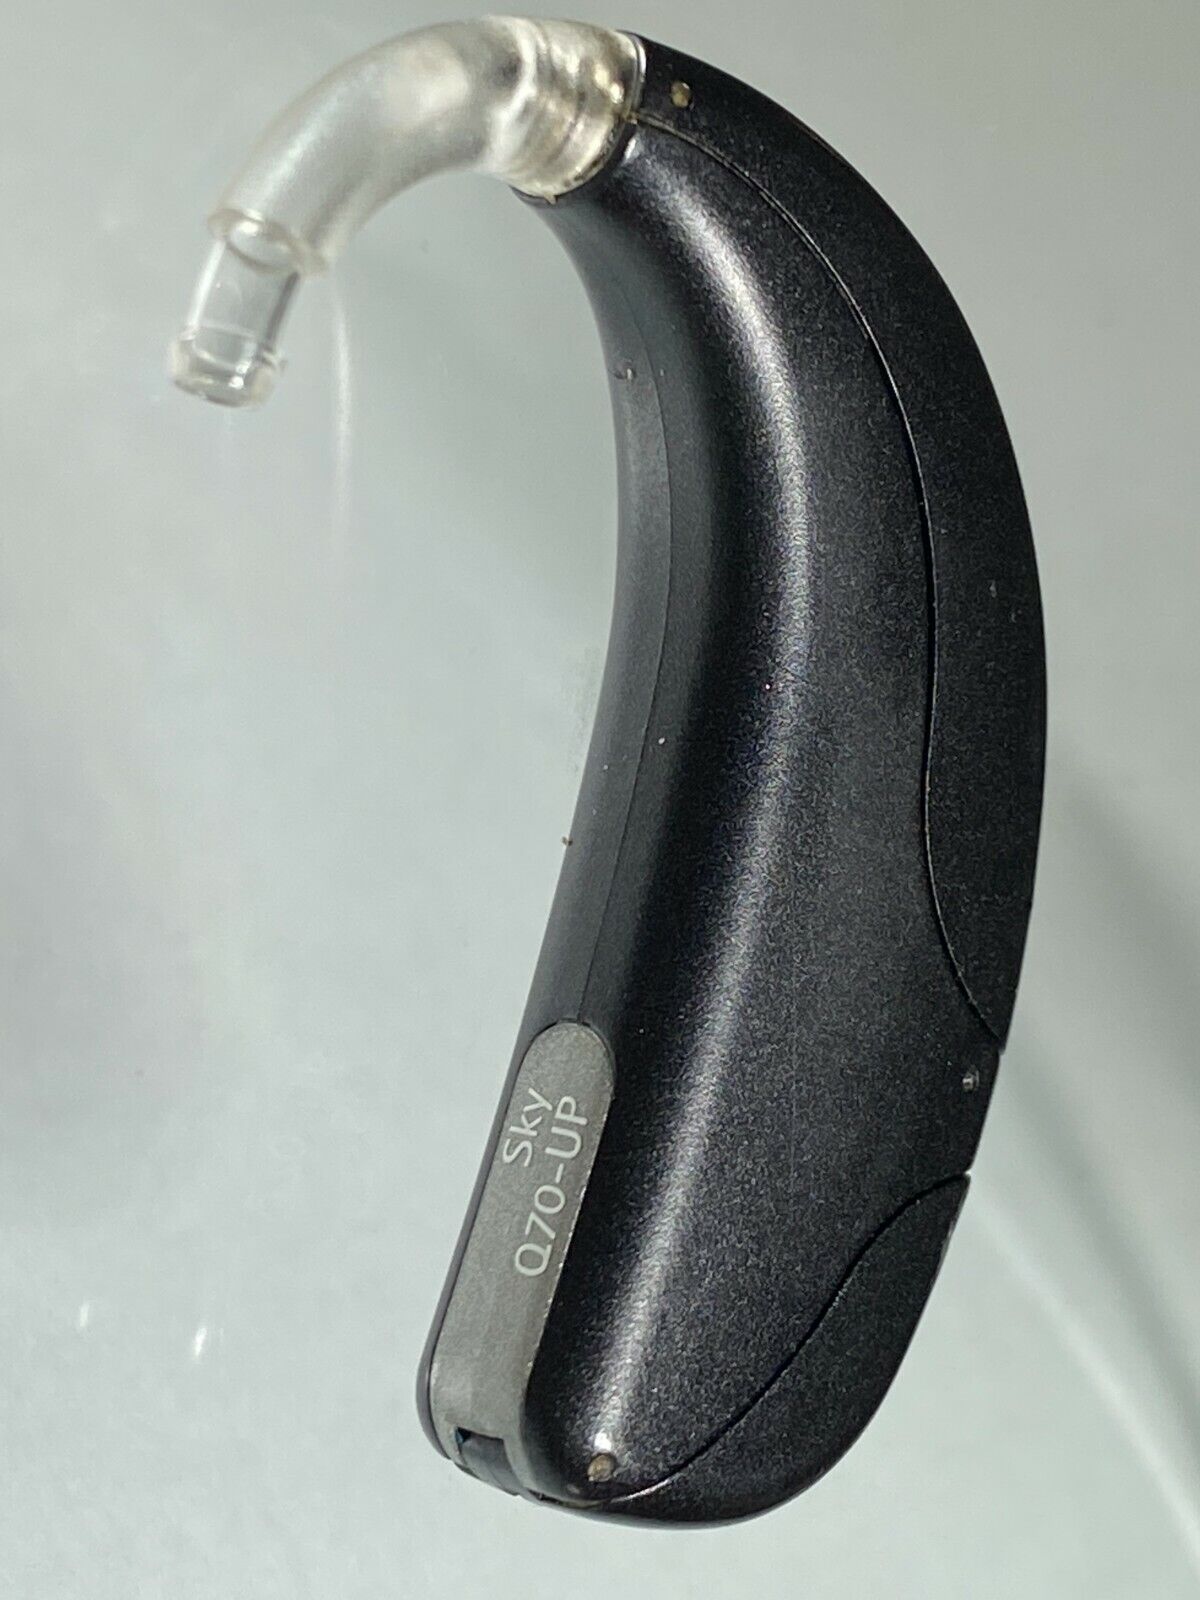 Popular product Award-winning store SKY Q70-UP BTE Hearing aid